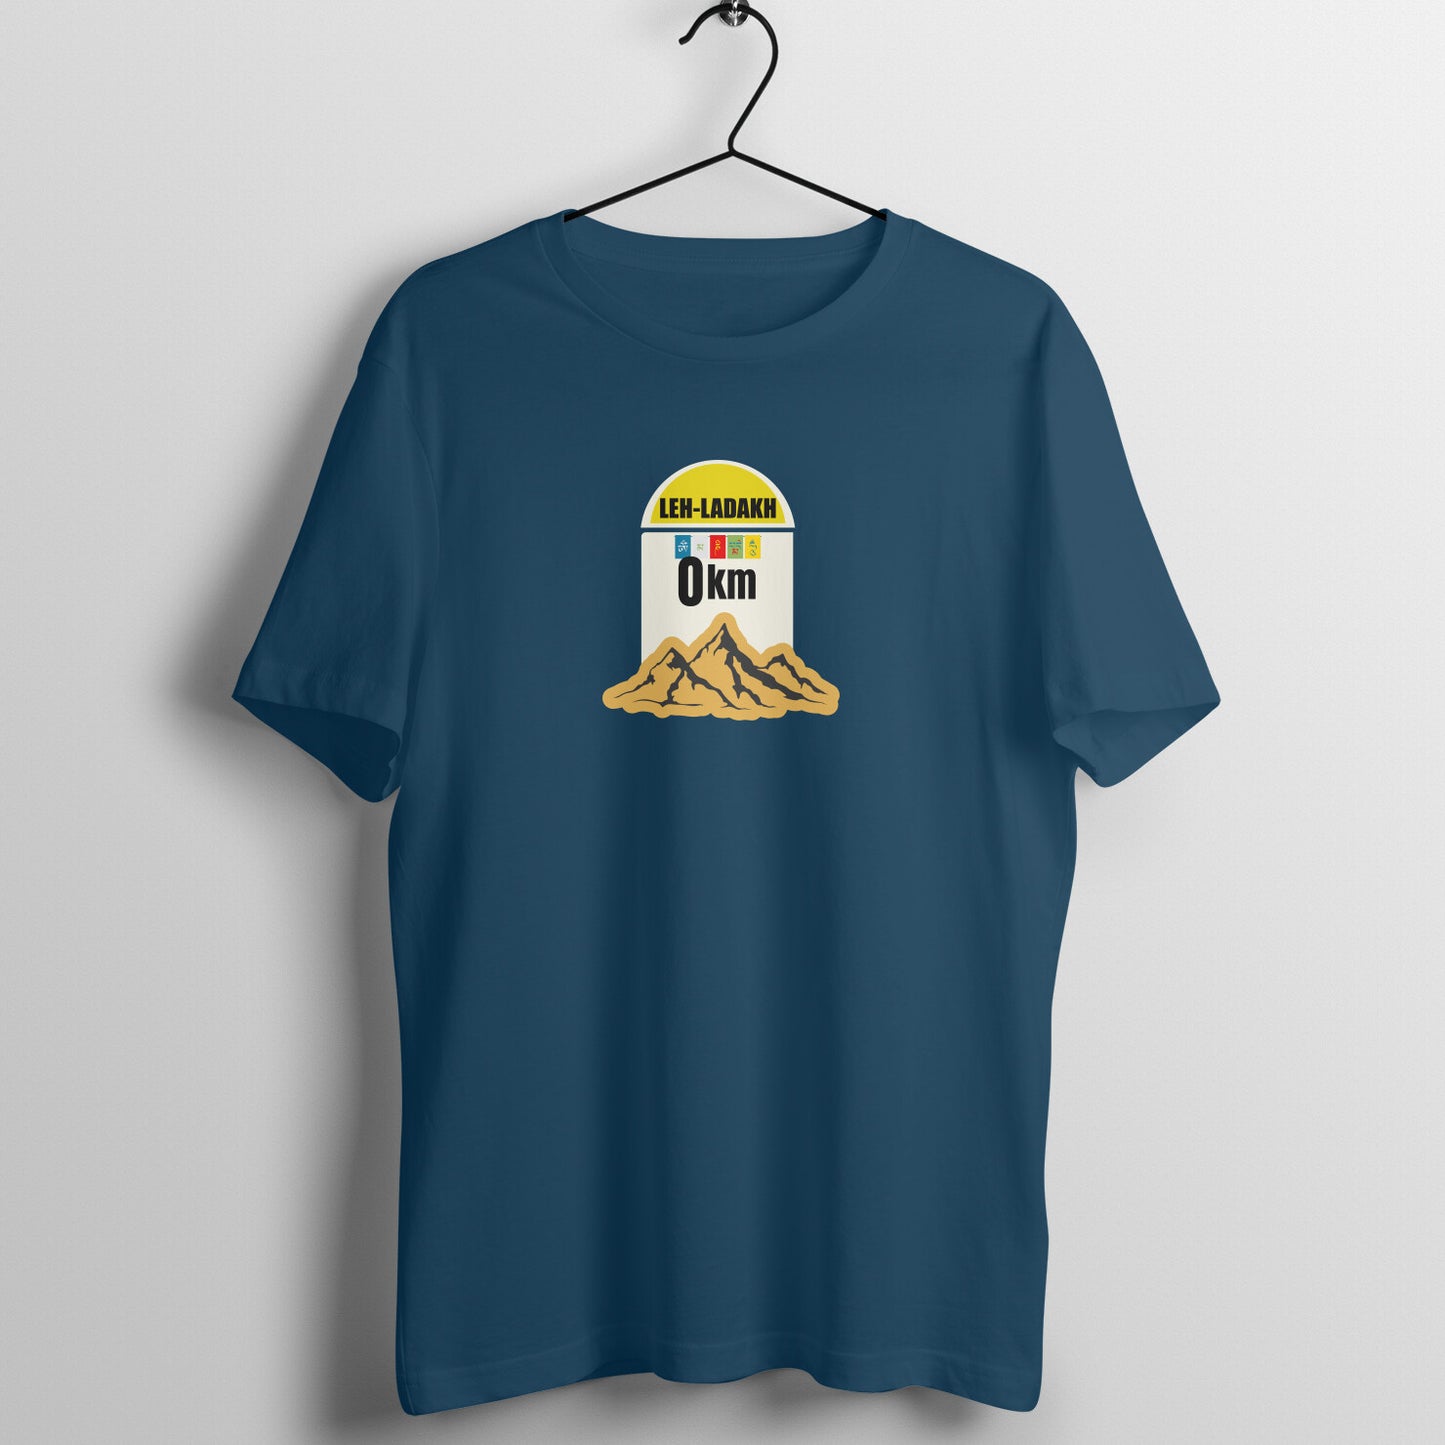 Leh-ladakh - Unisex T shirt - Start your dream tour with our collection